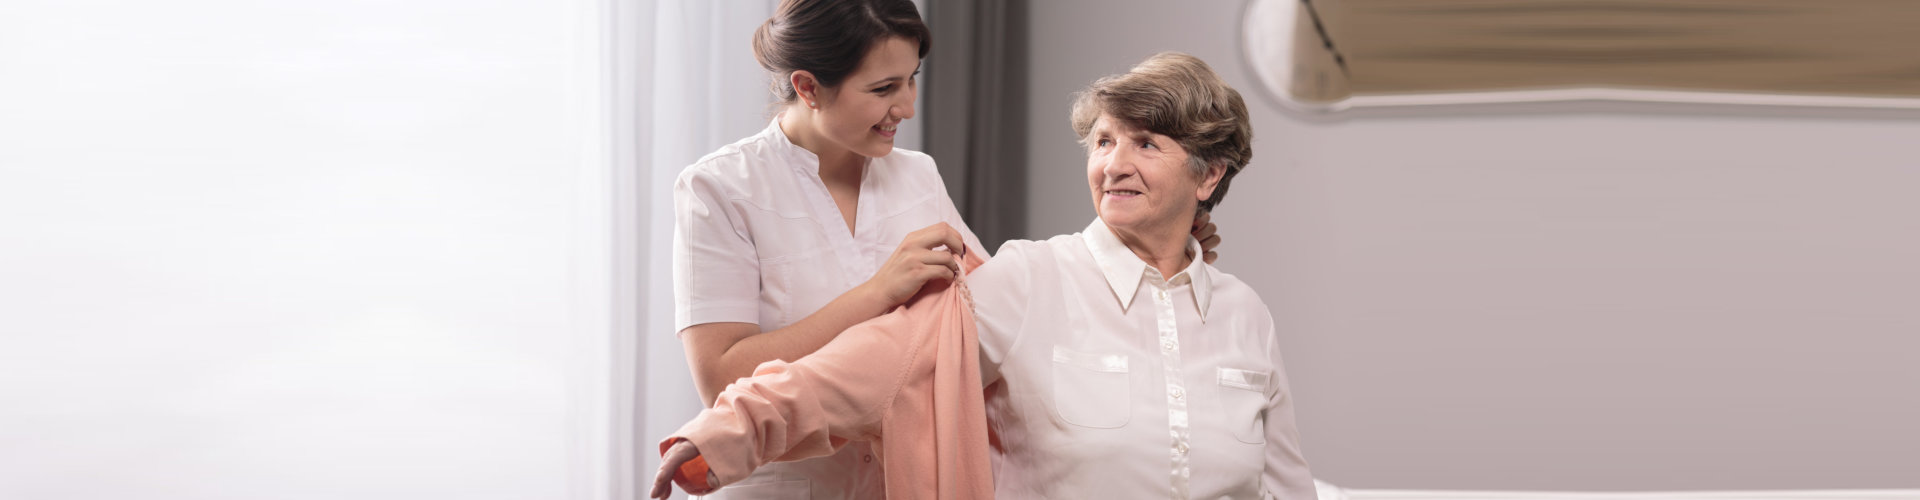 caregiver helping senior woman get dressed